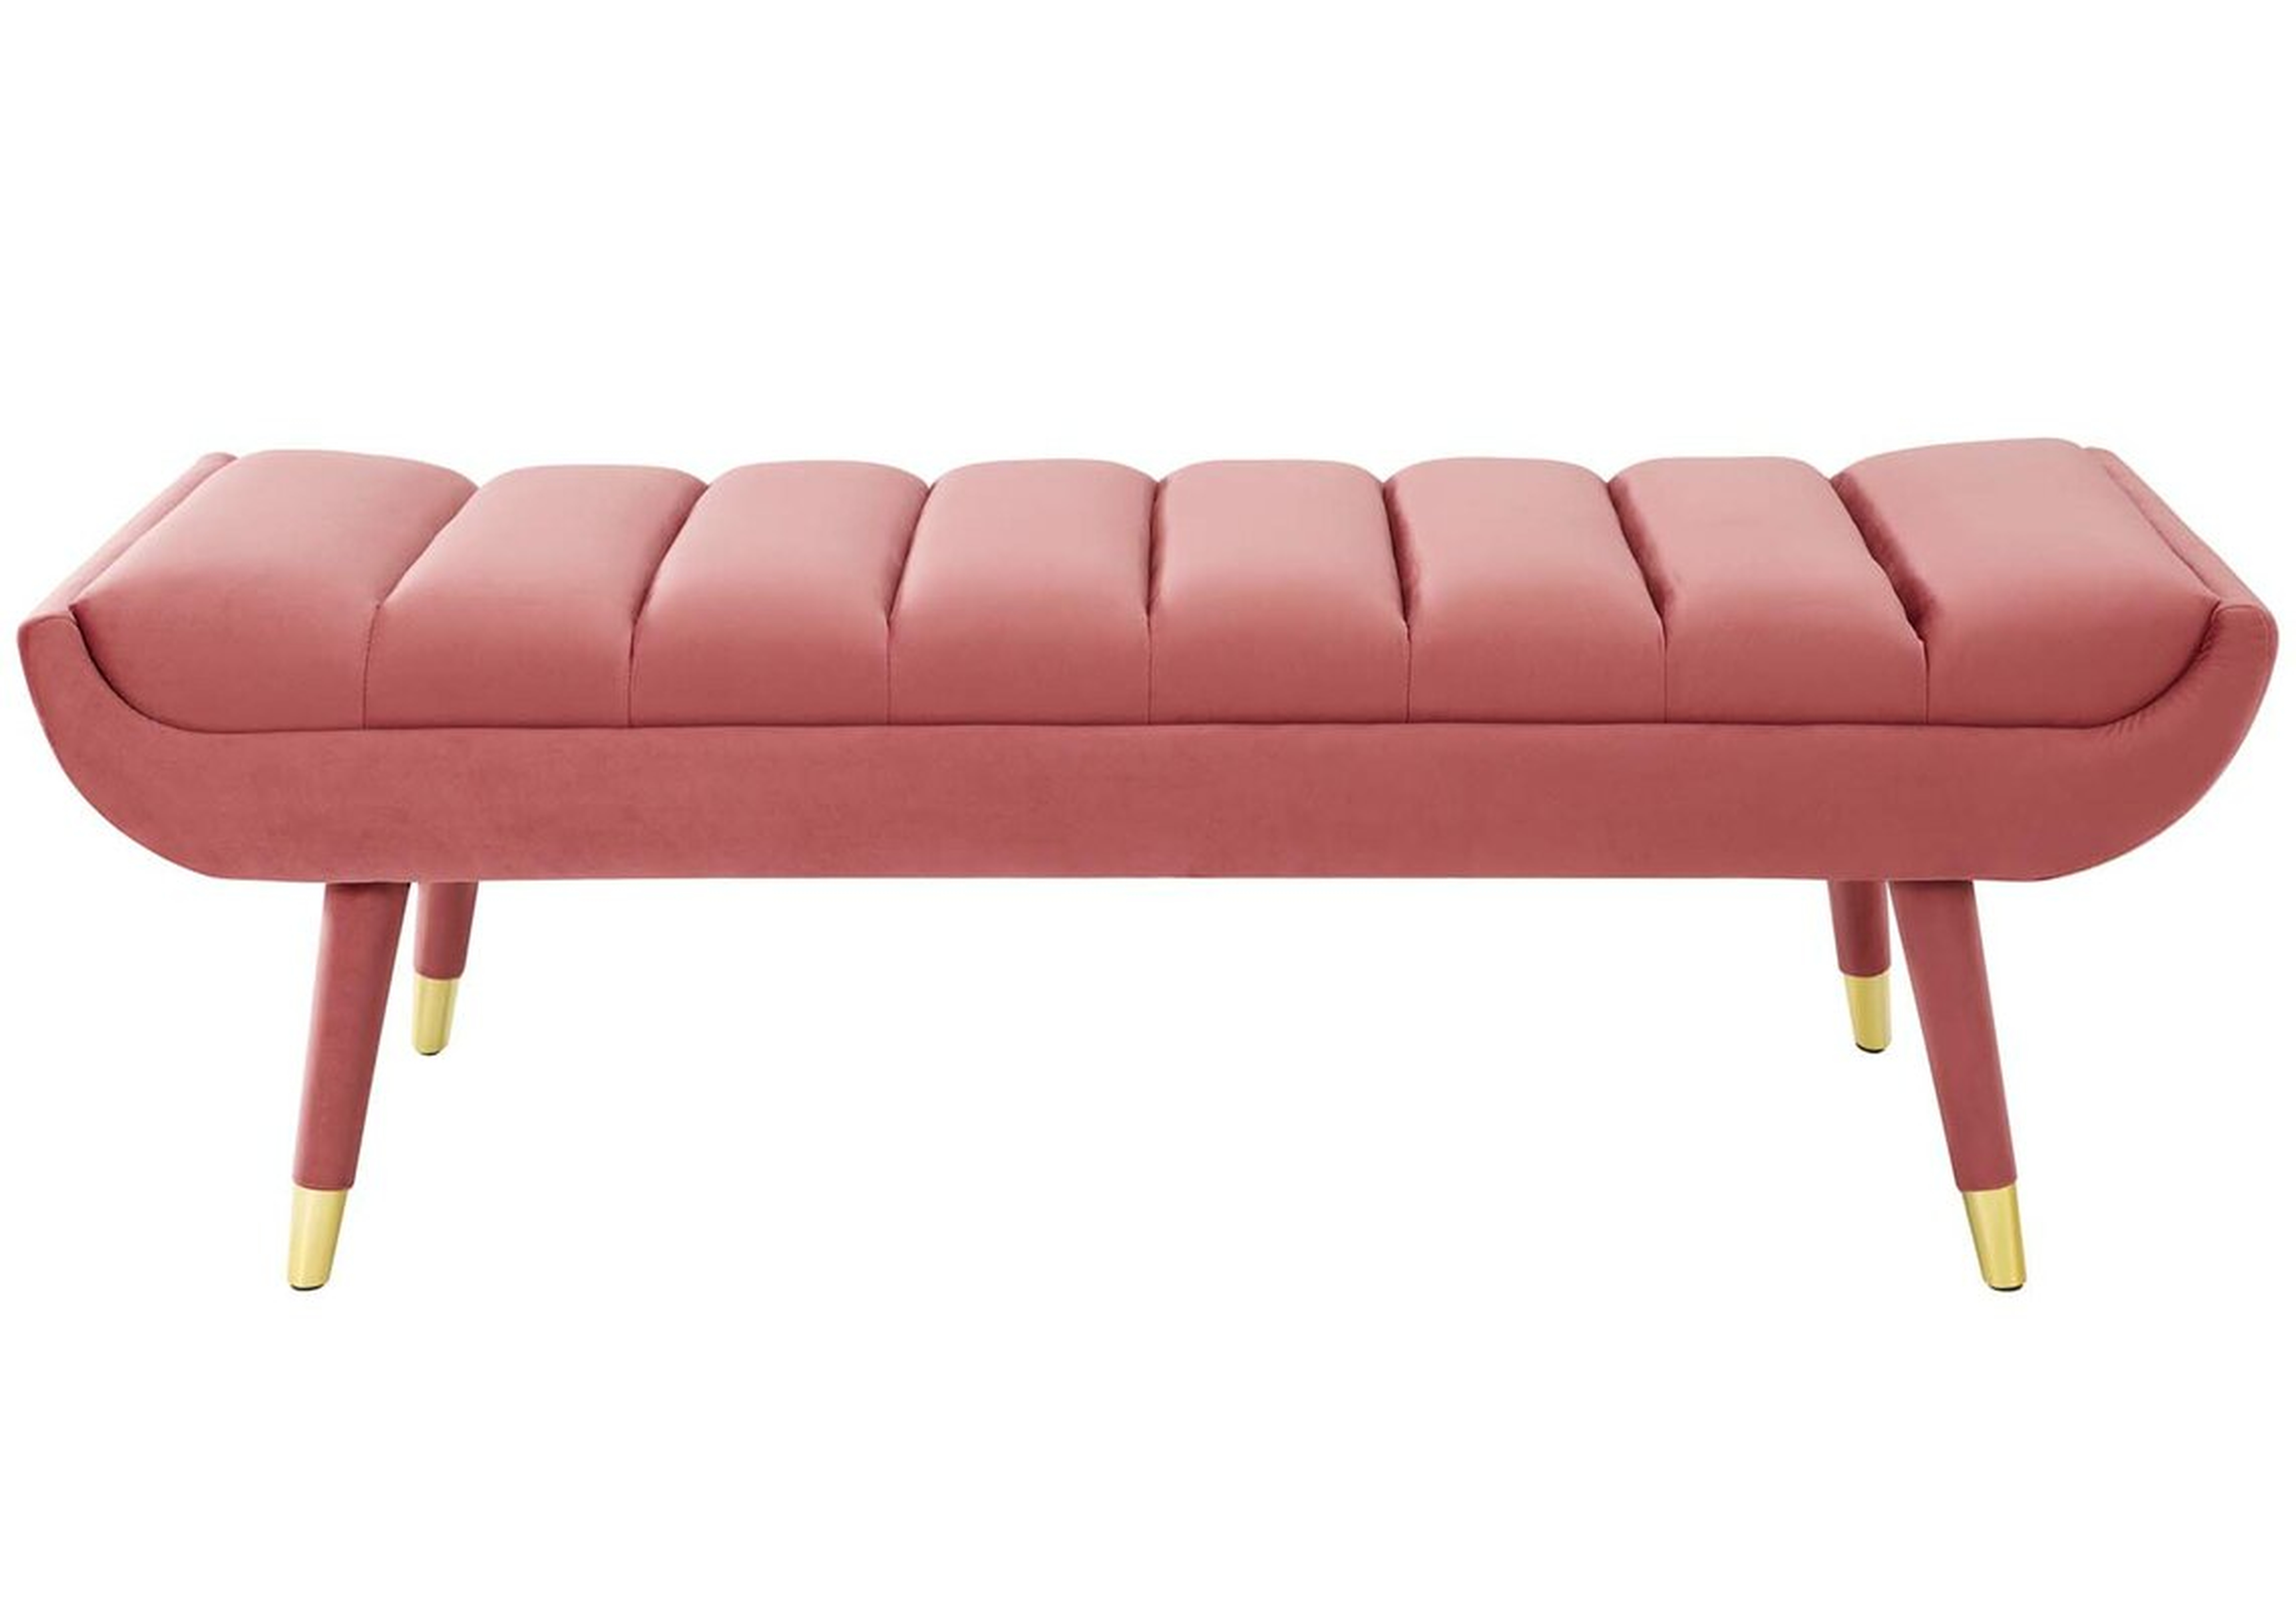 Mackay Upholstered Bench - Wayfair